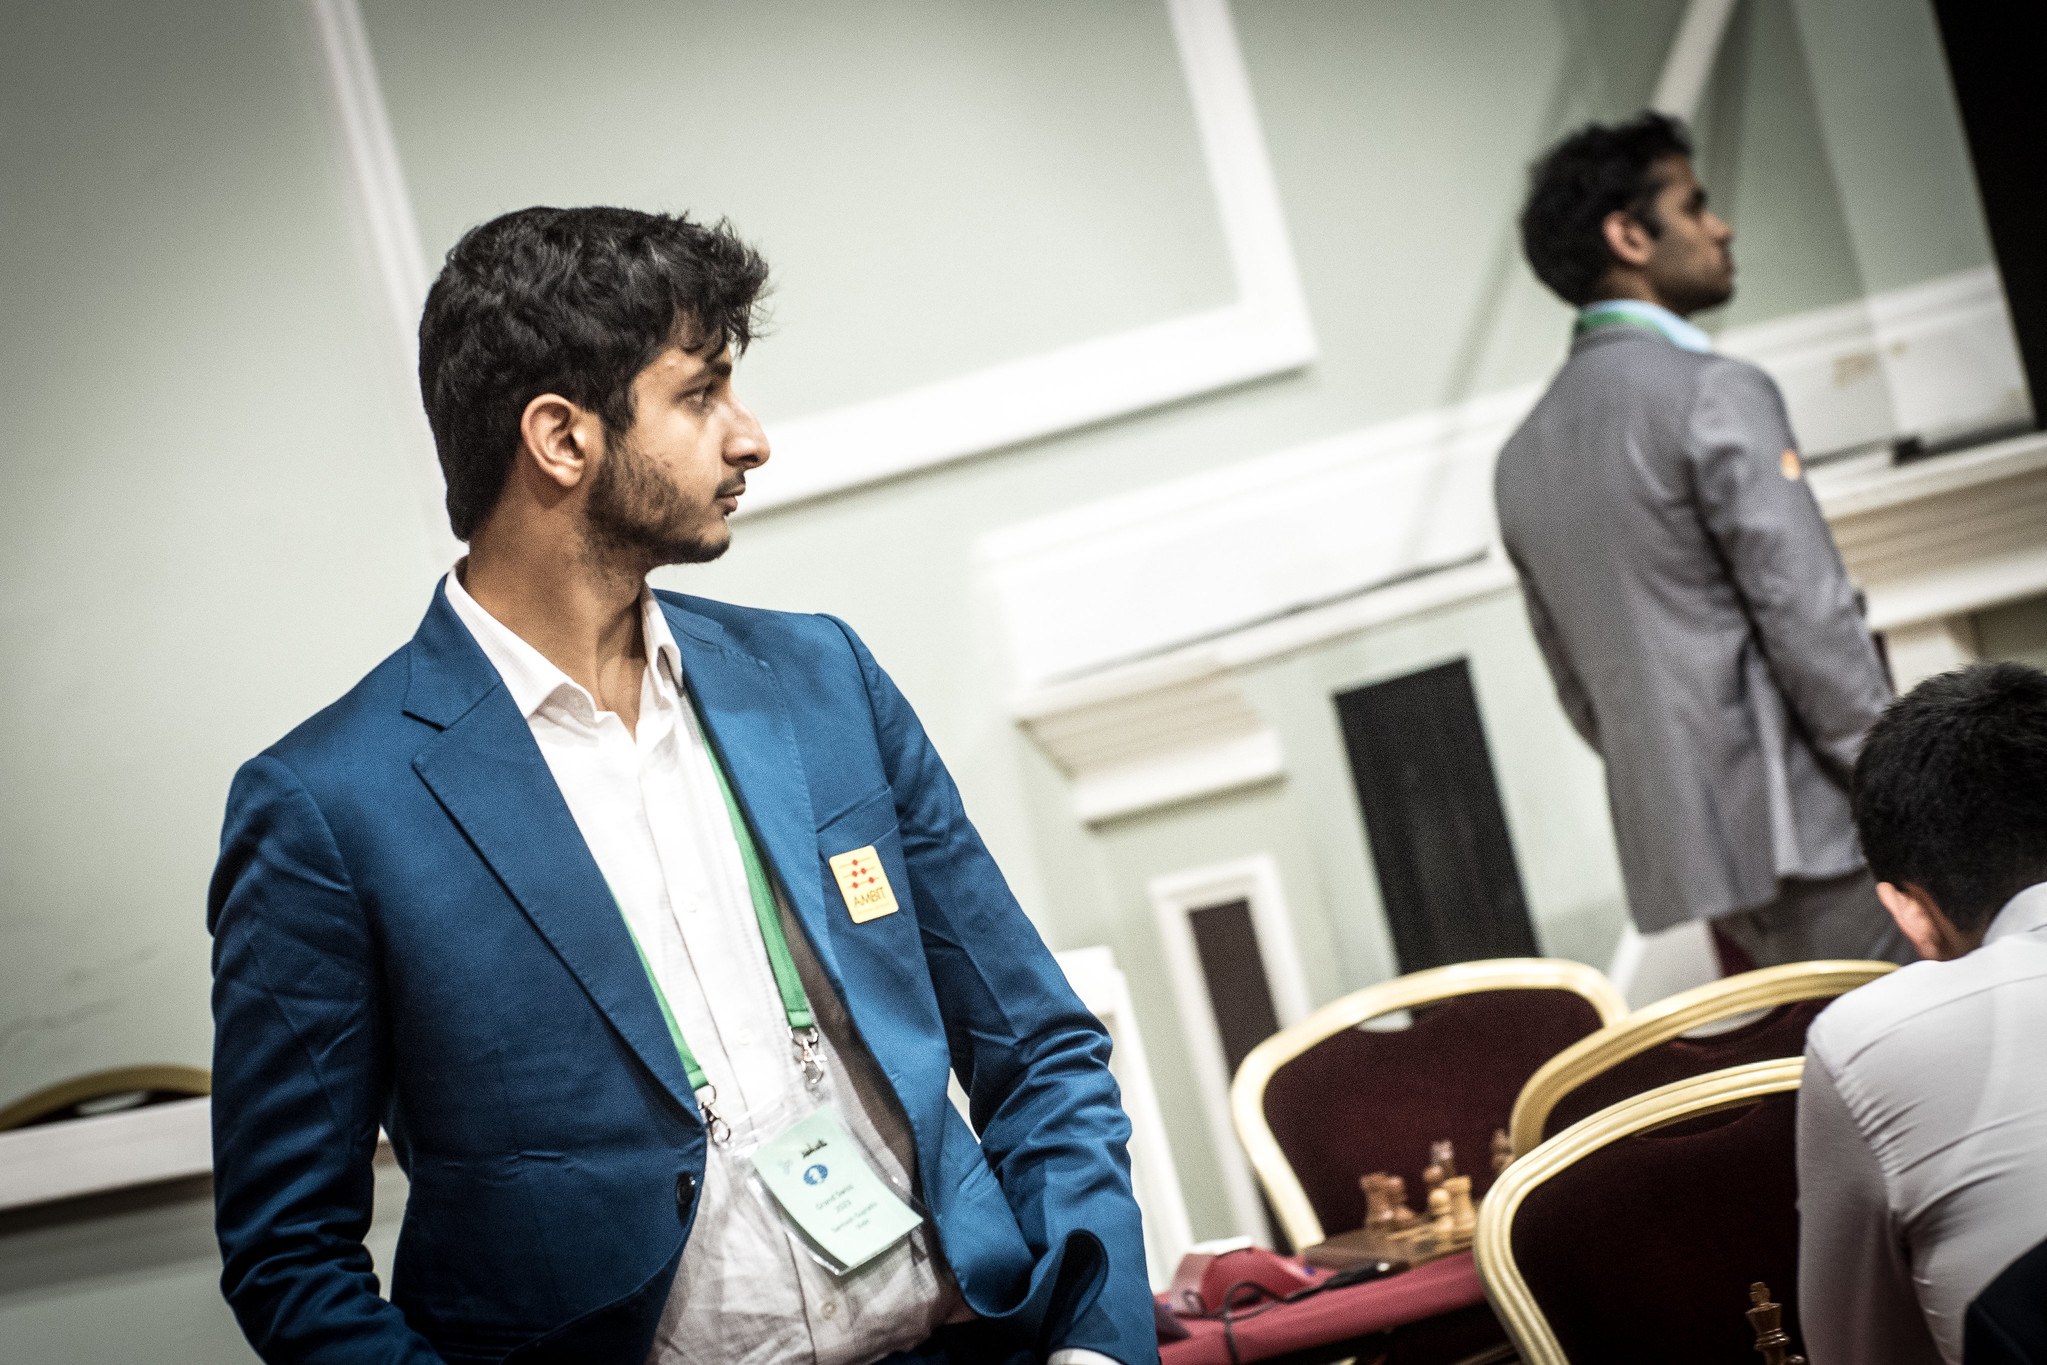 ChessBase India on X: The inspiring story of Aditya Mittal who